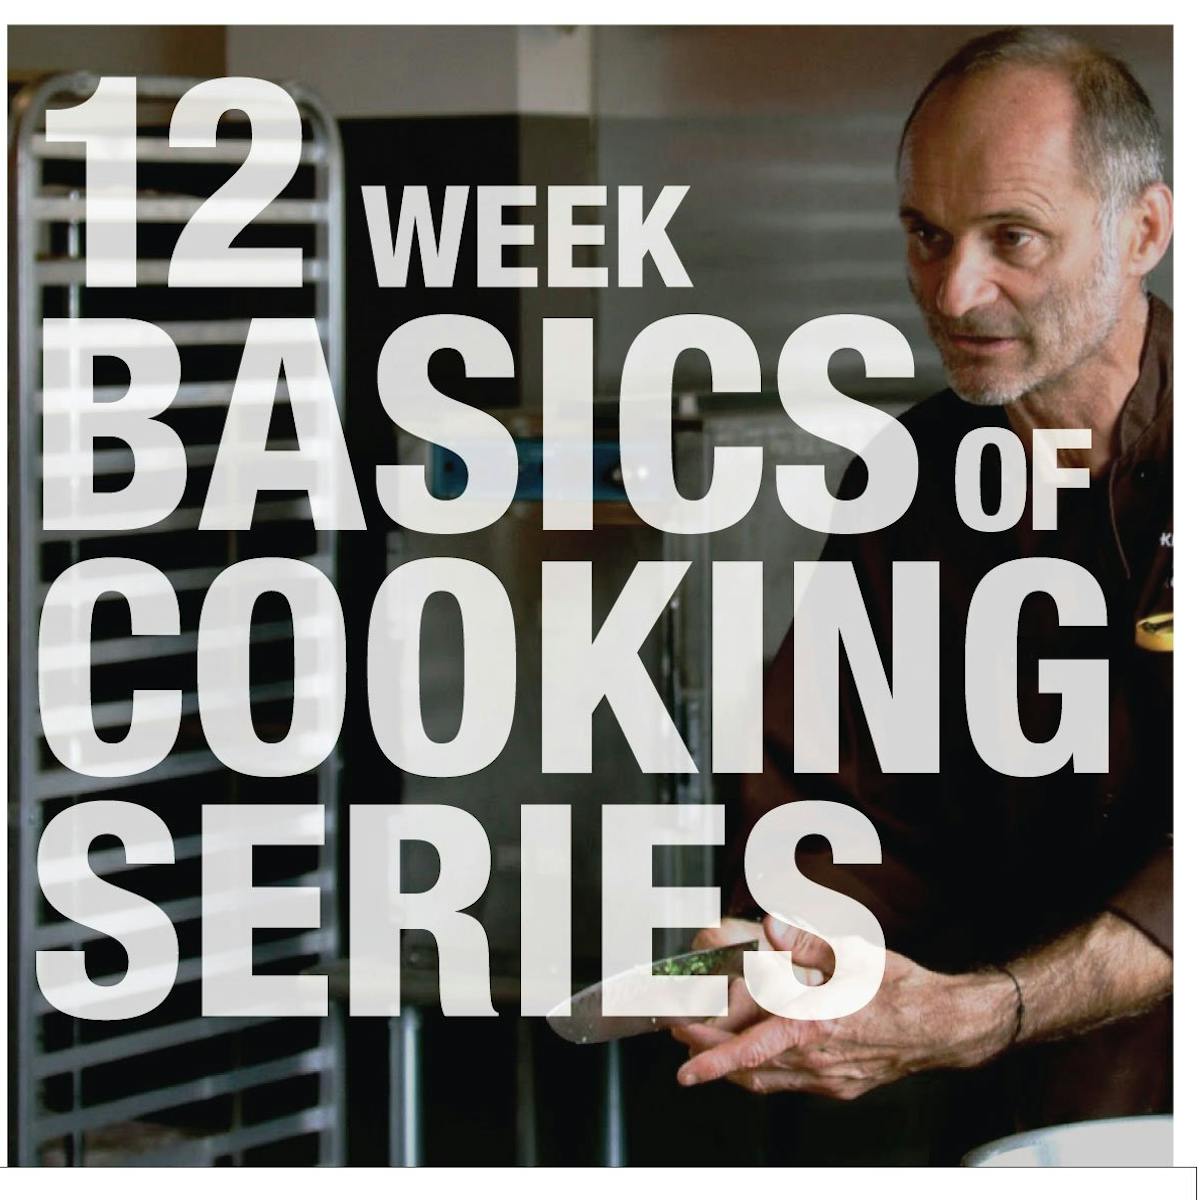 12-WEEK BASICS OF COOKING SERIES